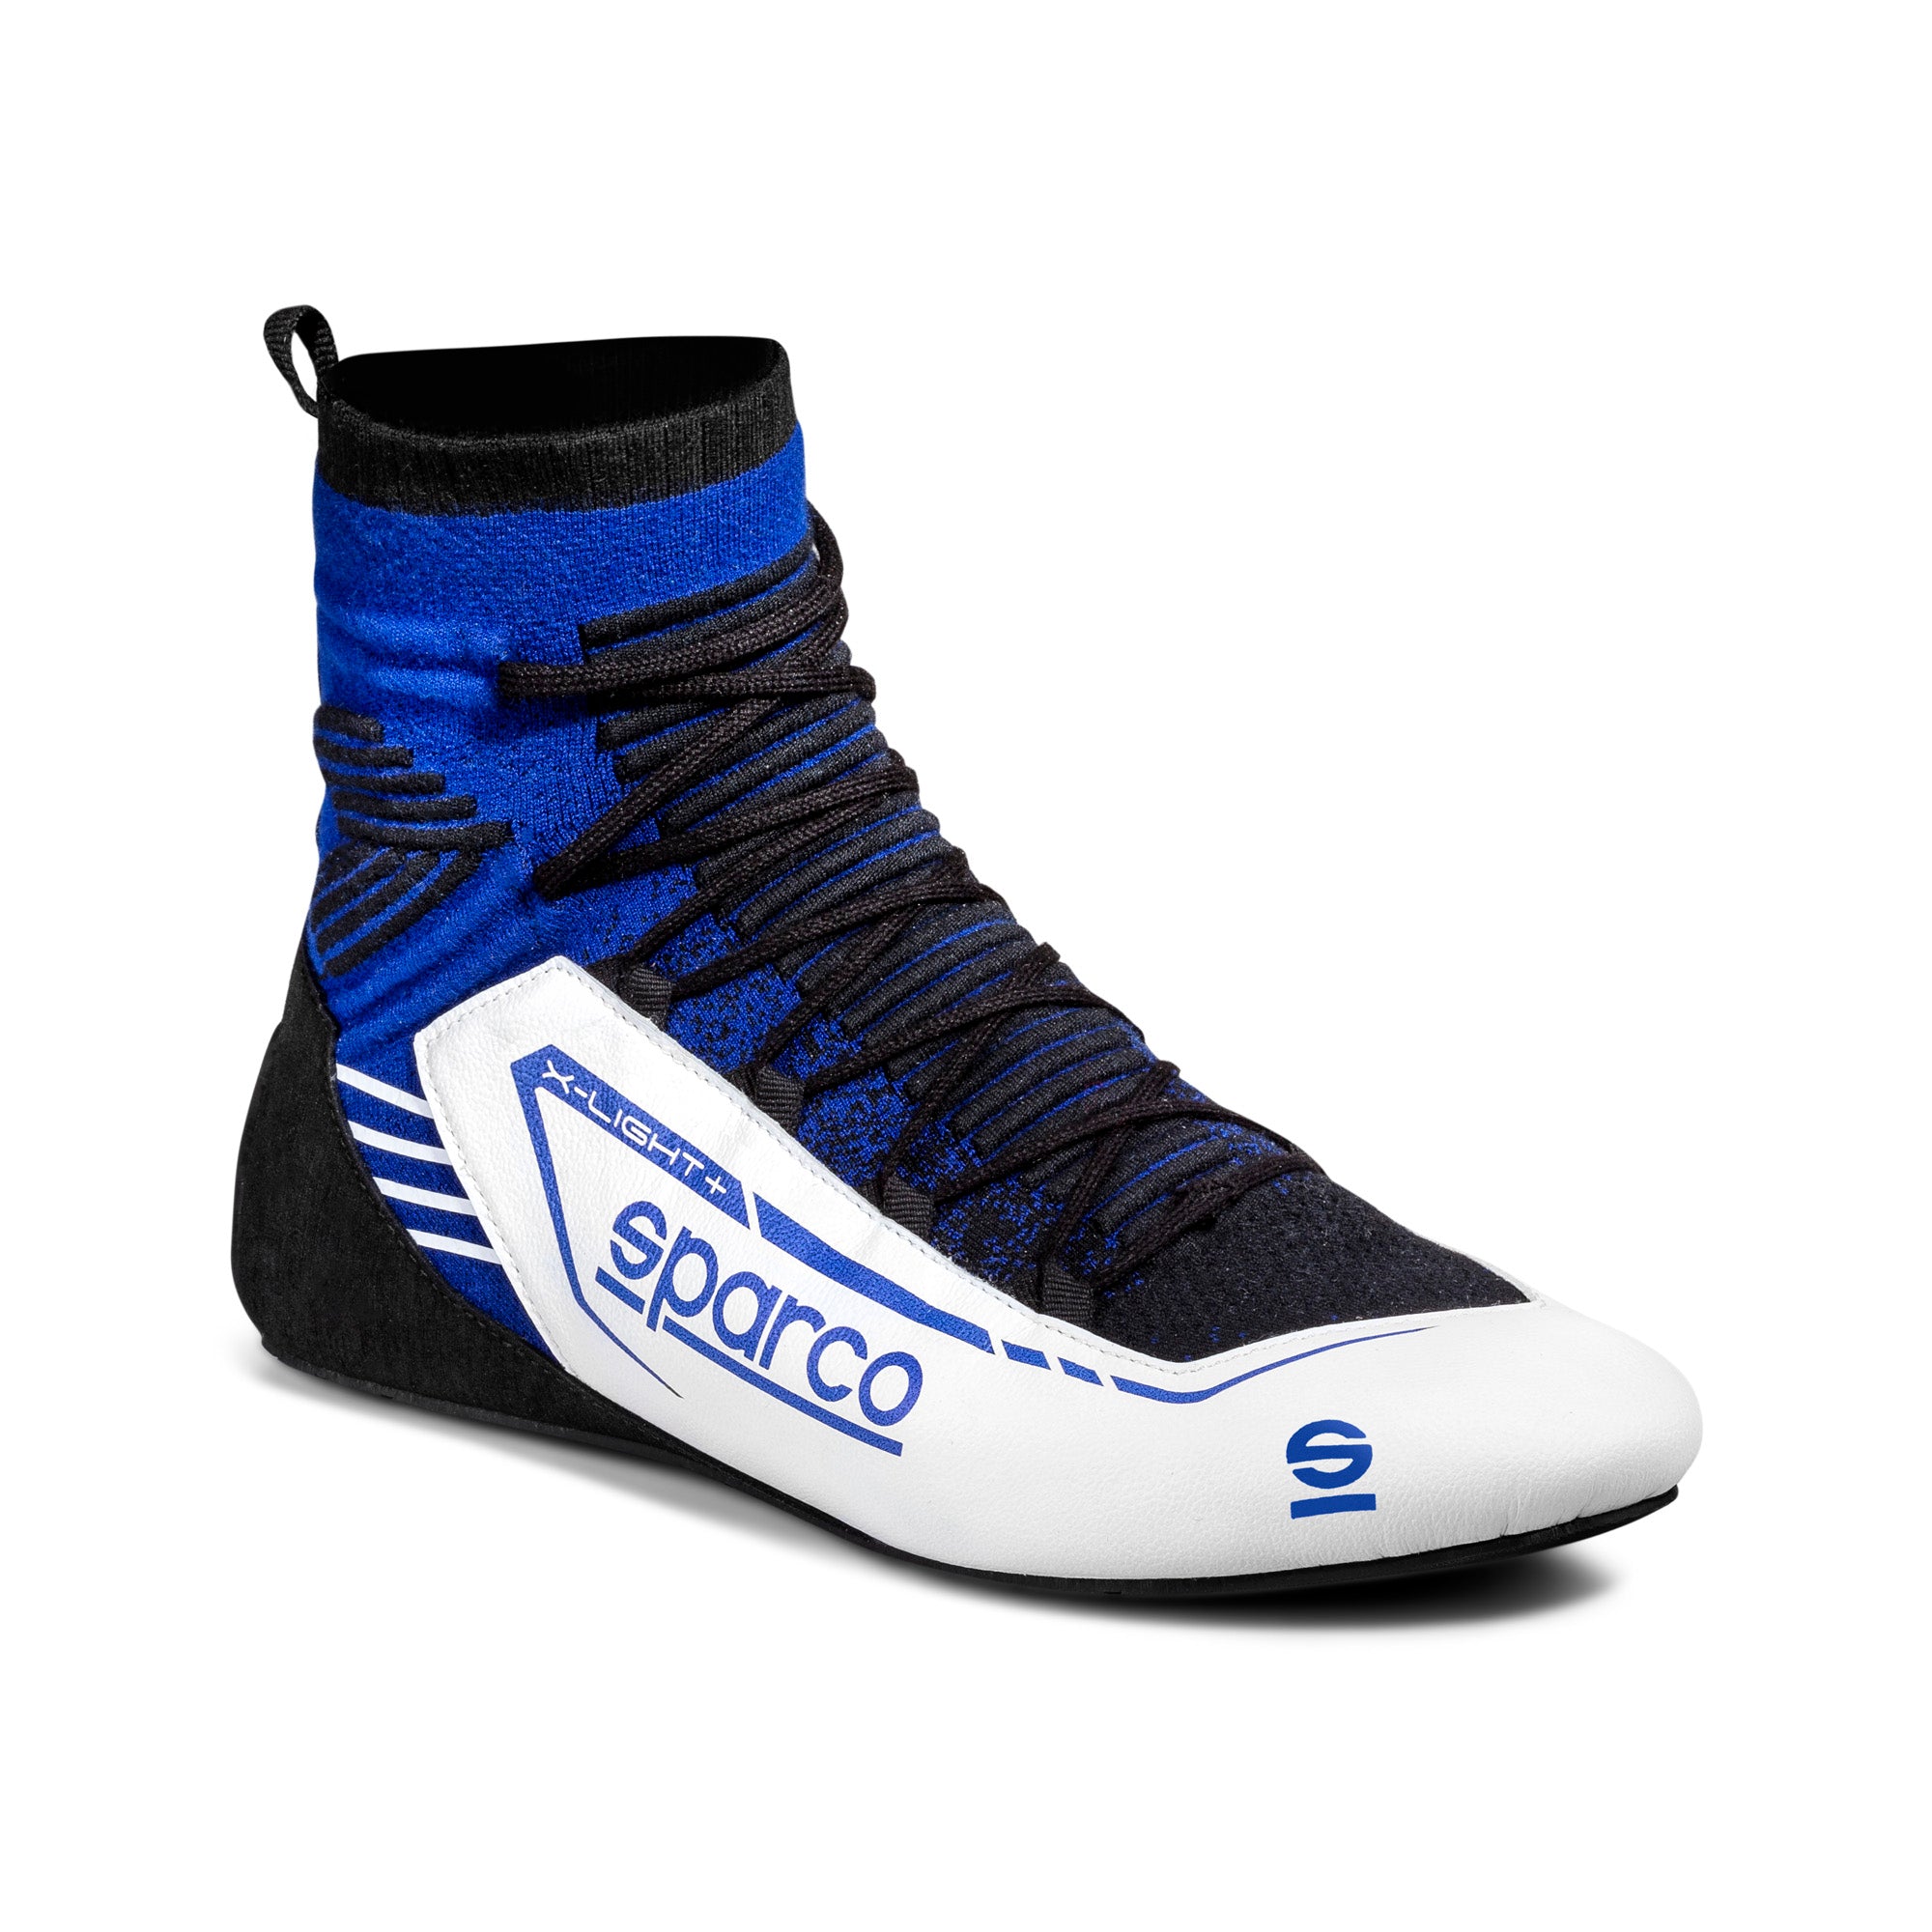 Sparco X-Light+ Racing Shoes - 2021 Colors